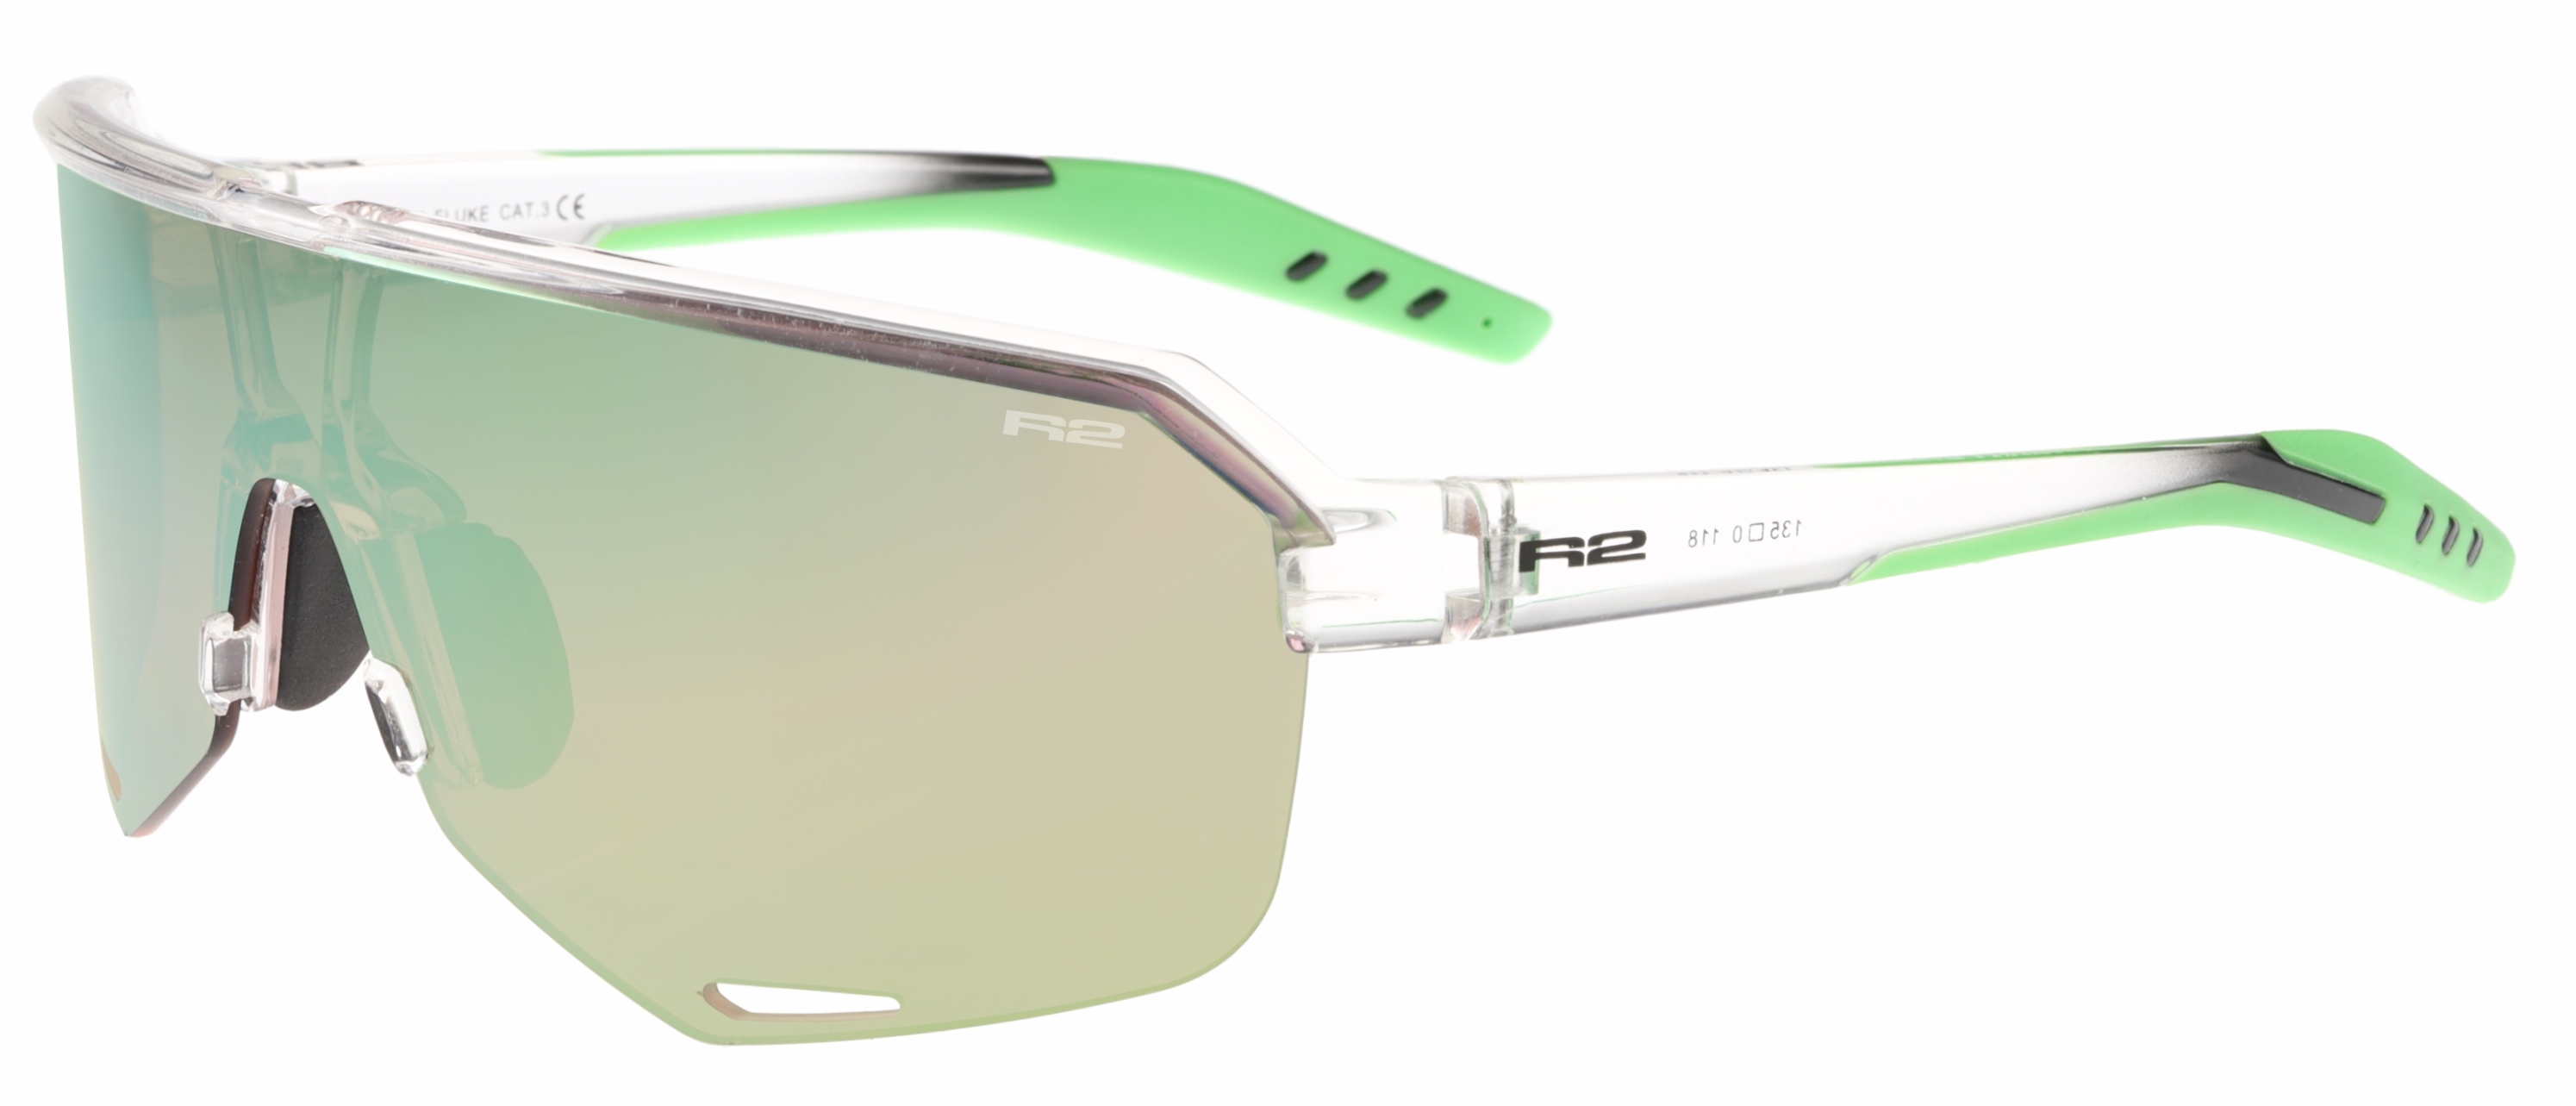 HD polarized sunglasses  R2 FLUKE AT100M